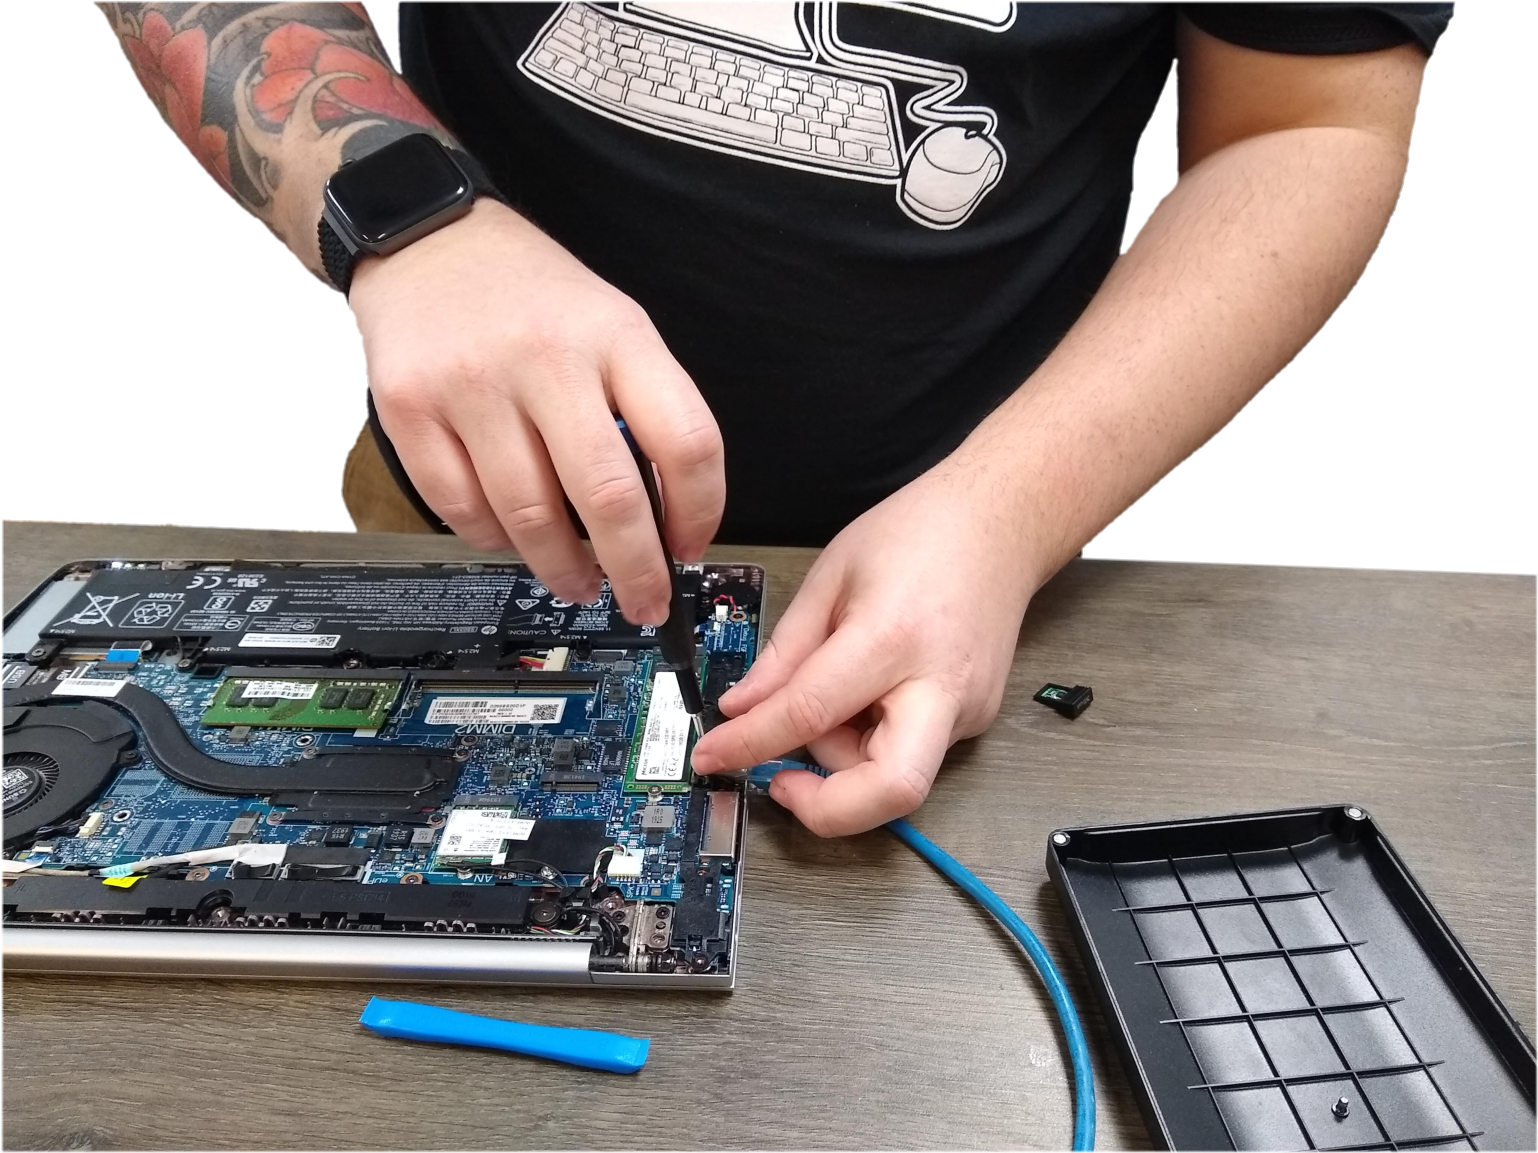 Man's hands mending a computer motherboard